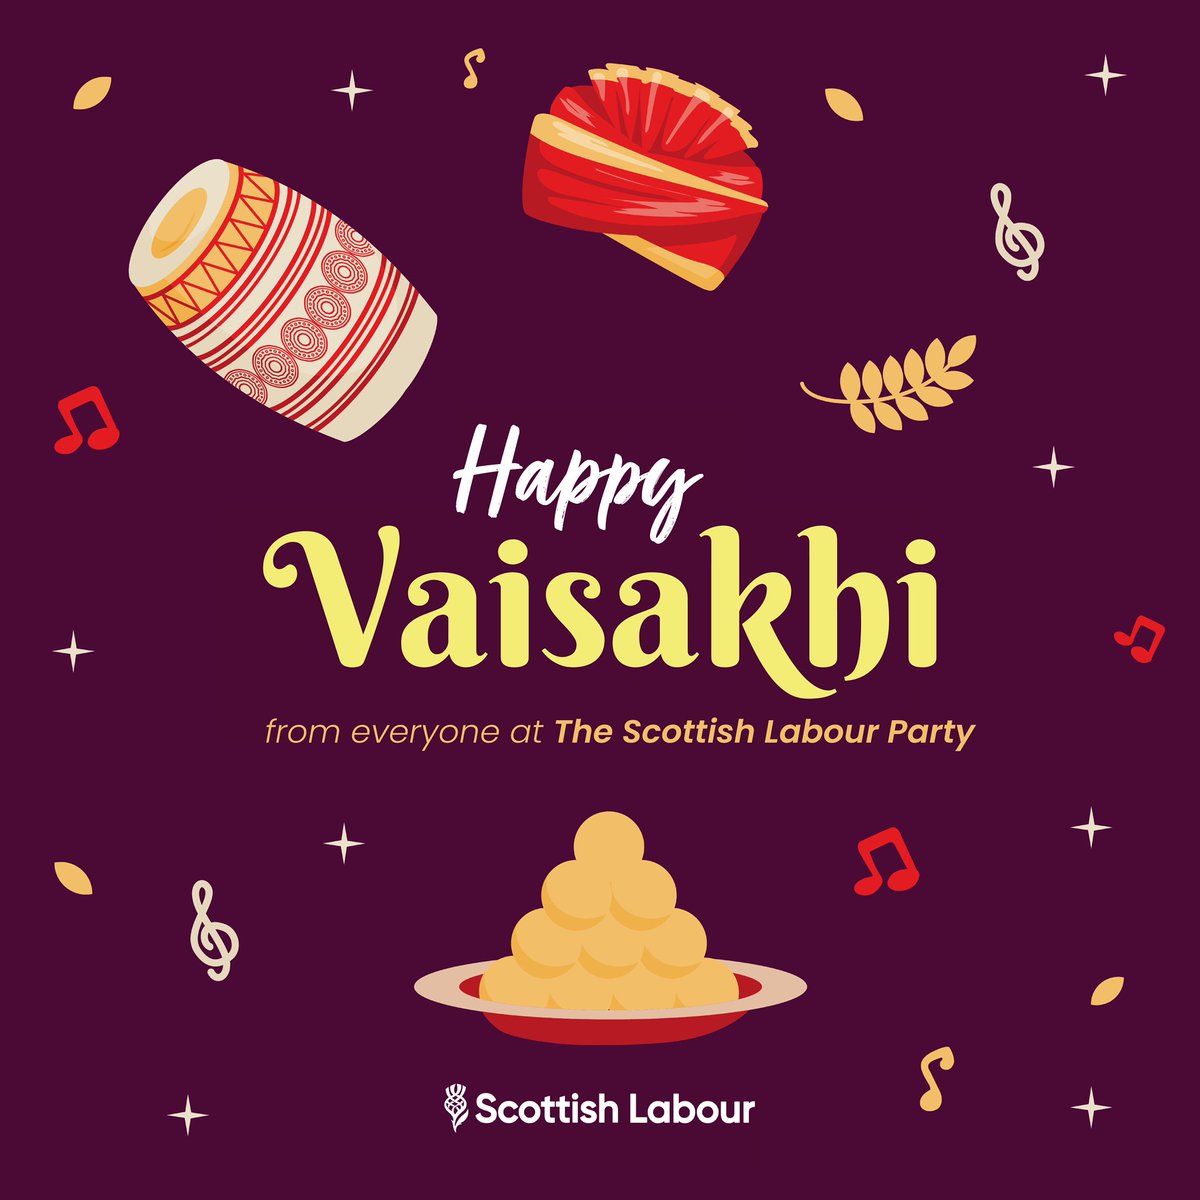 Vaisakhi di lakh lakh vidai! From all of us at Scottish Labour, Happy Vaisakhi to anyone celebrating.